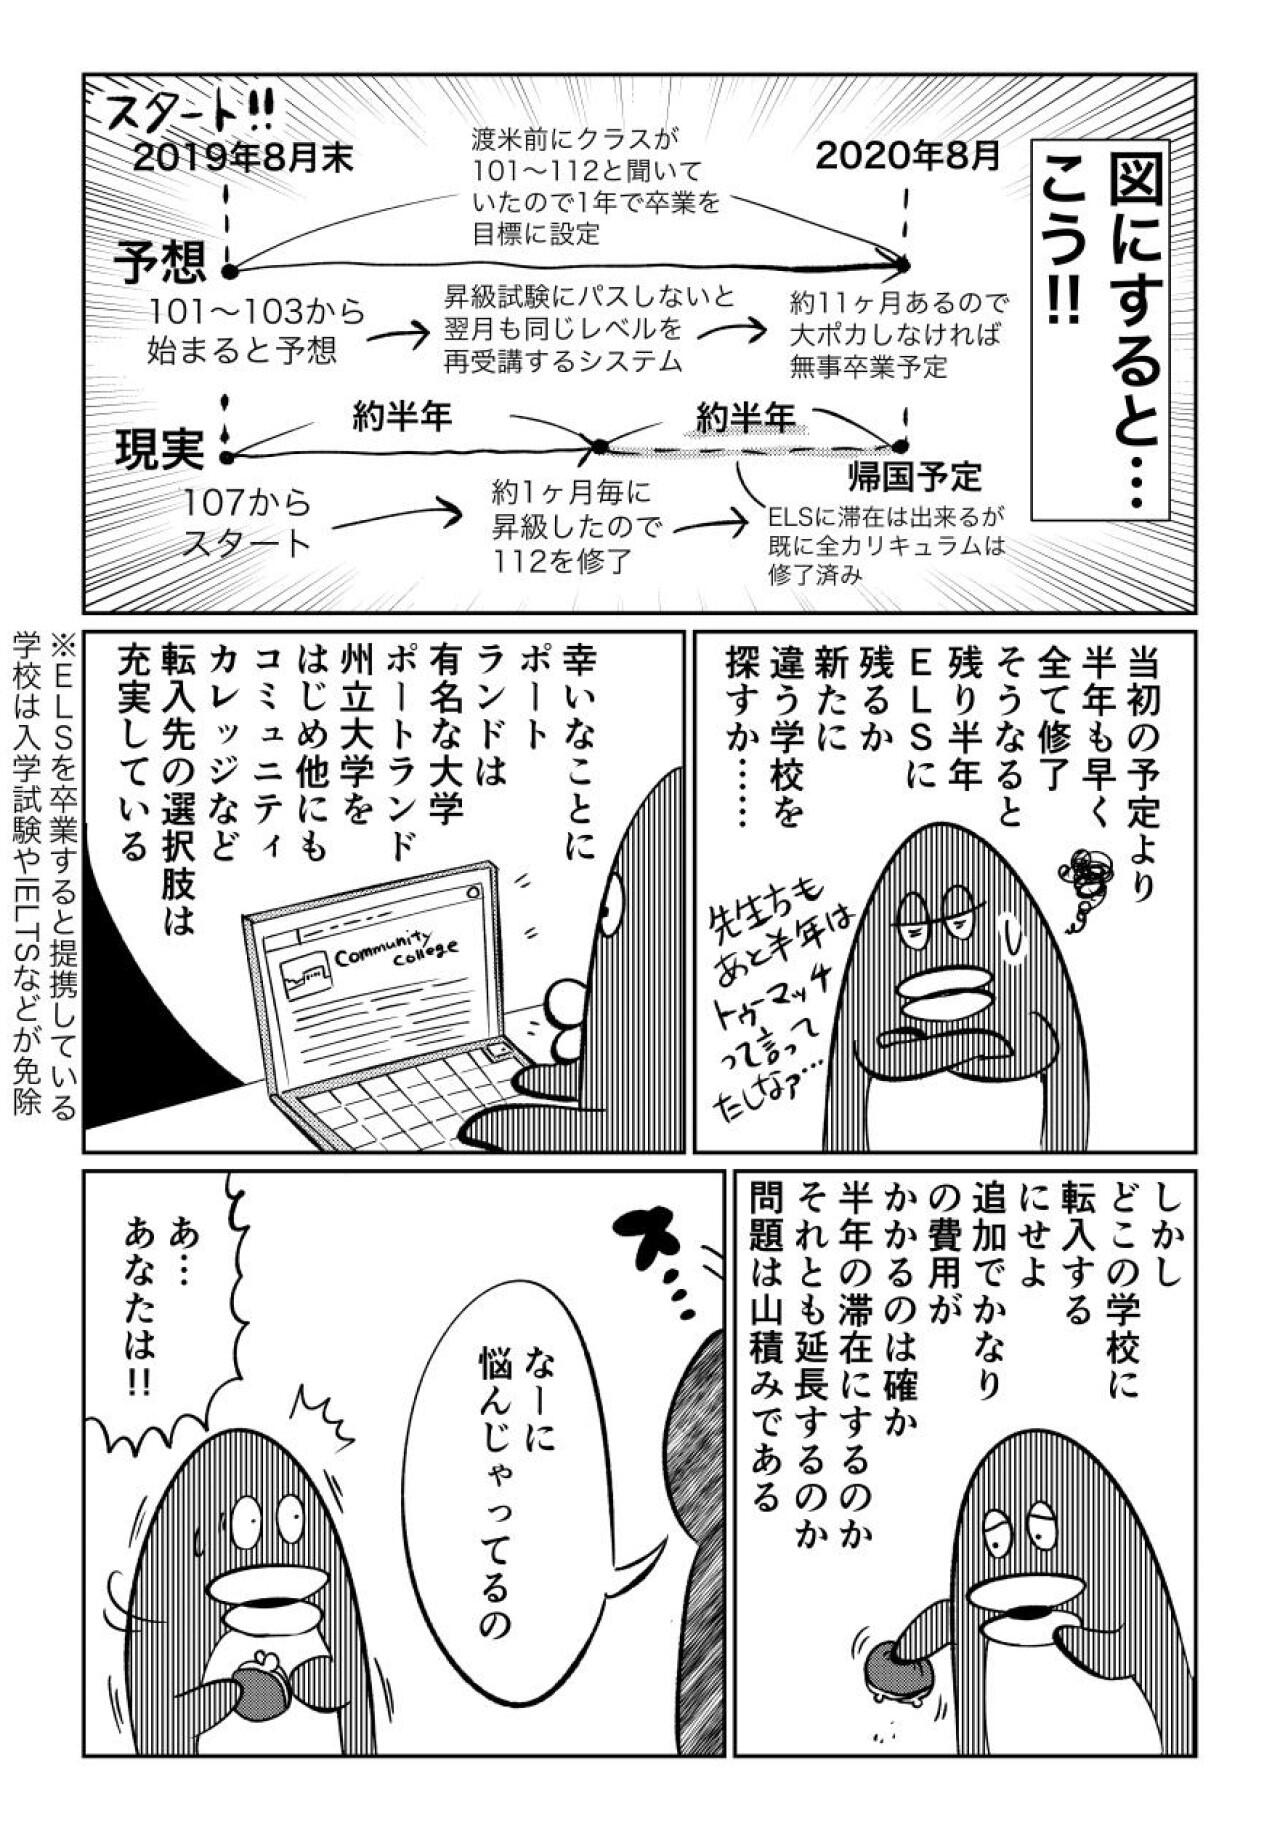 https://www.ryugaku.co.jp/column/images/34sai13_2_1280.jpg